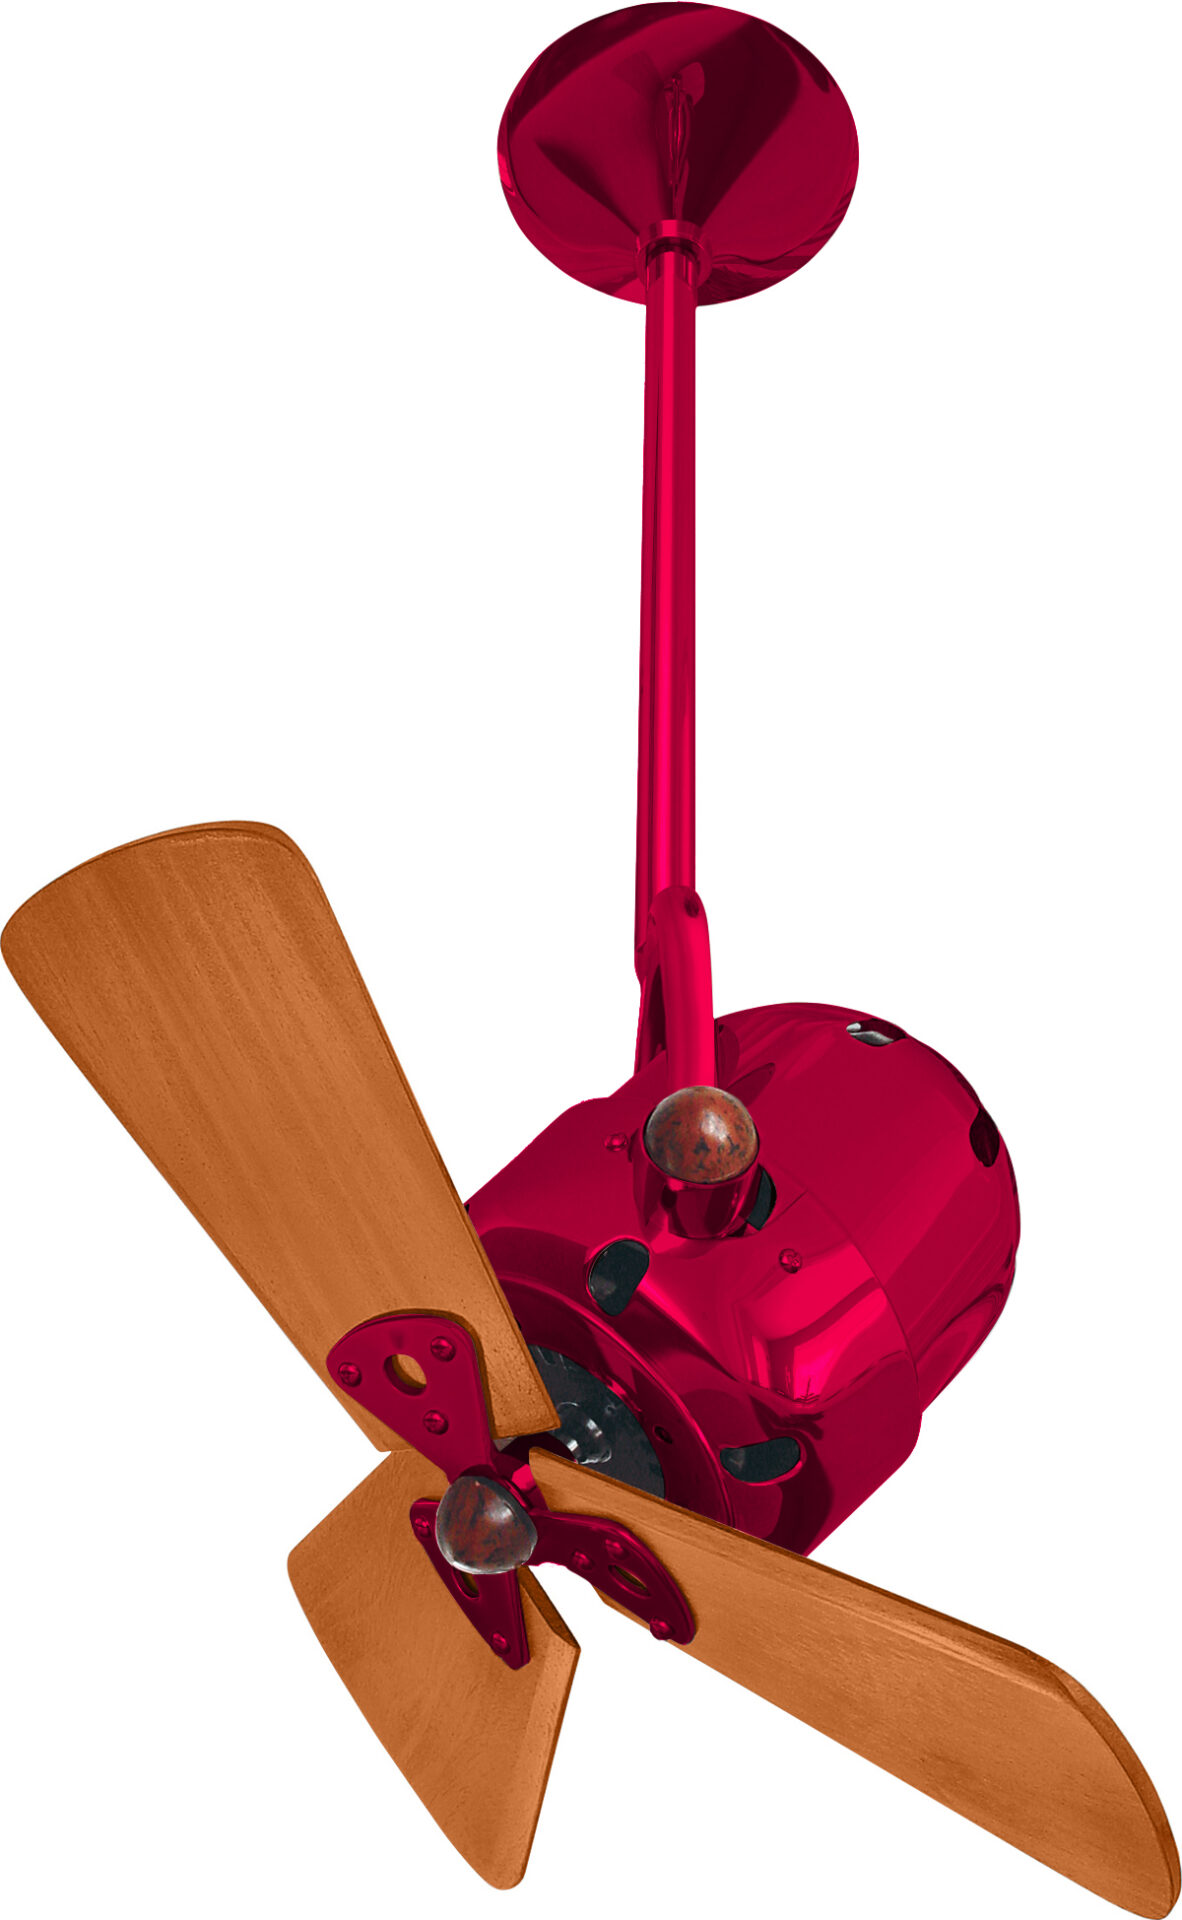 Bianca Direcional ceiling fan in Red / Rubi with mahogany wood blades by Matthews Fan Company.